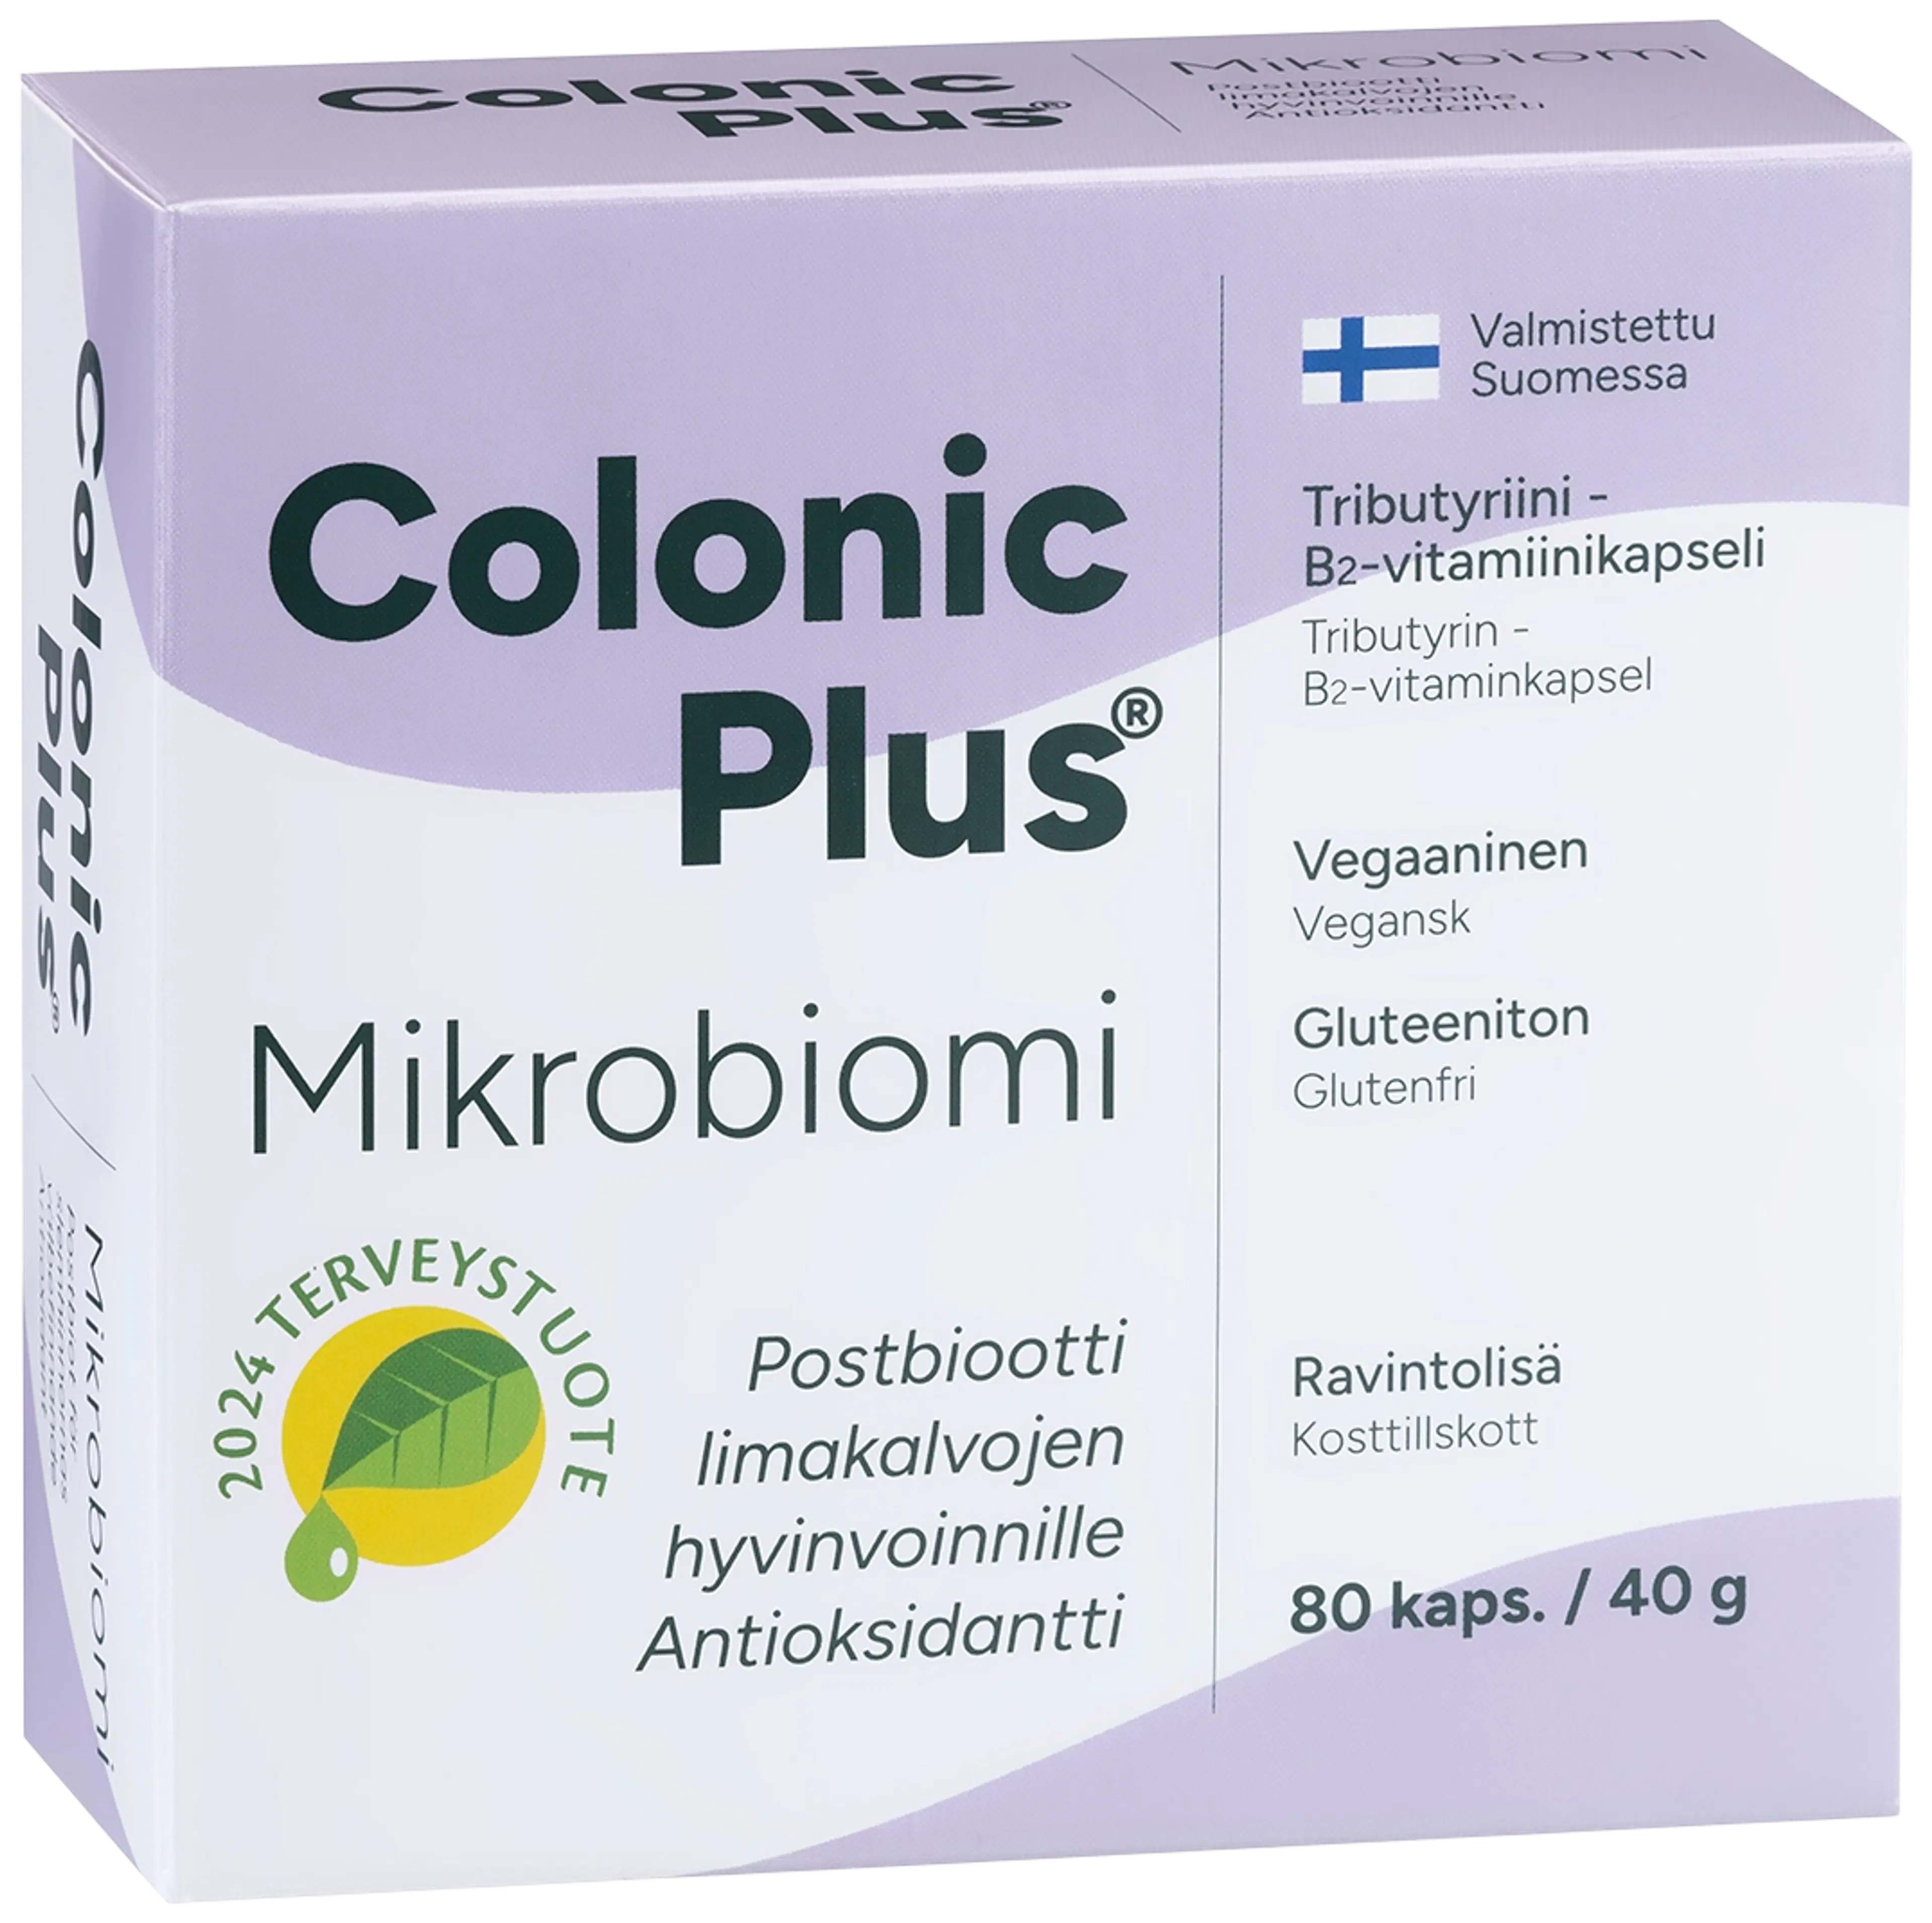 Colonic Plus Mikrobiomi Tributyriini - B2-vitamiinikapseli 80 kaps